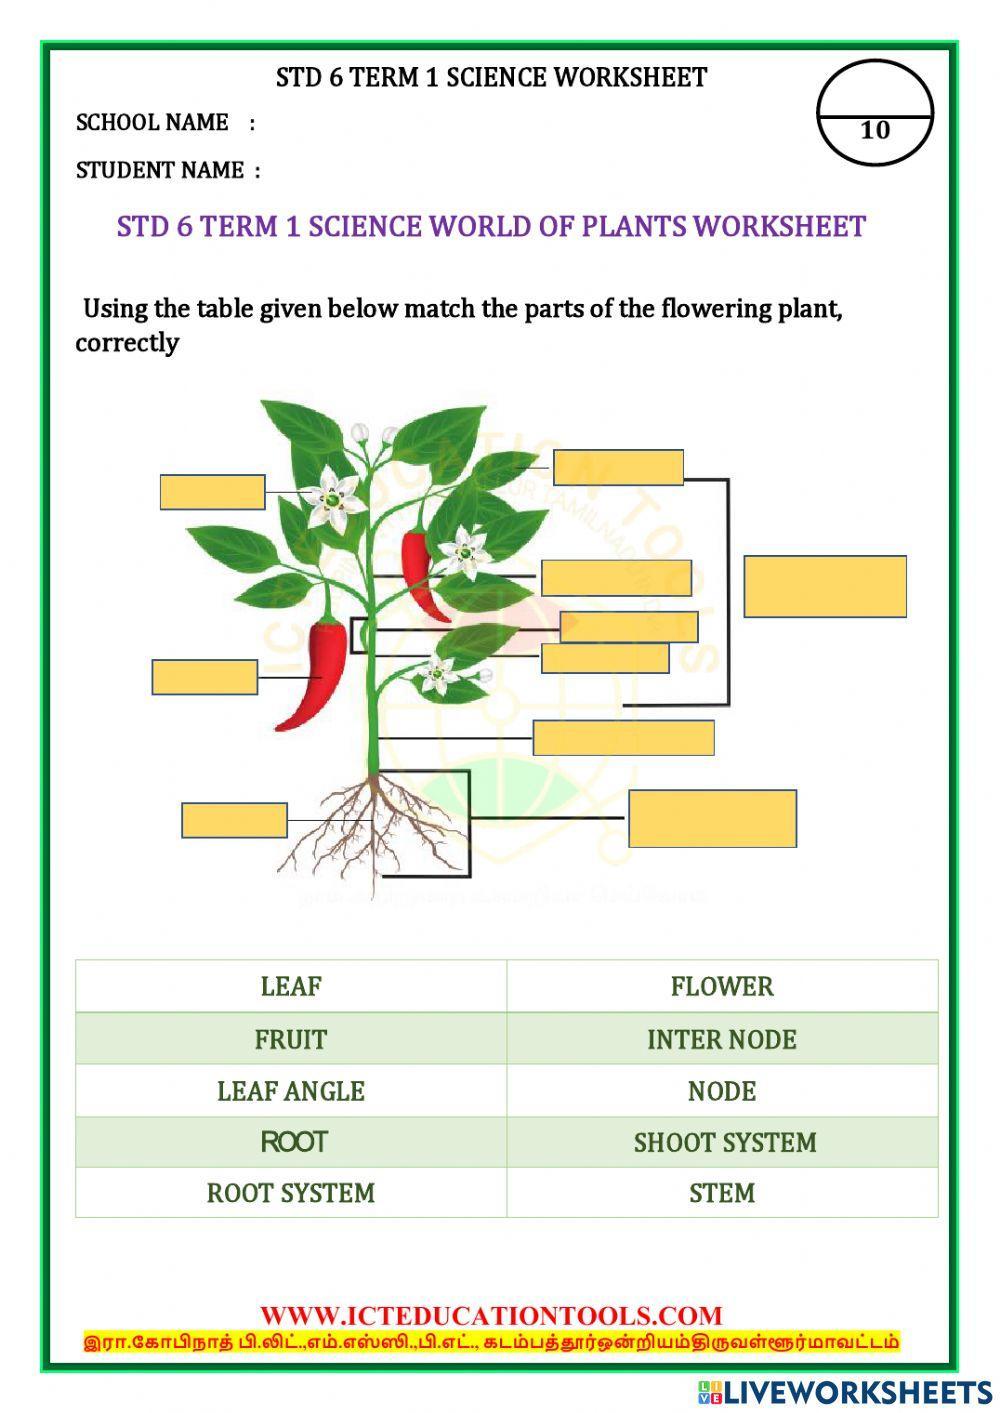 Std 6 science world of plants